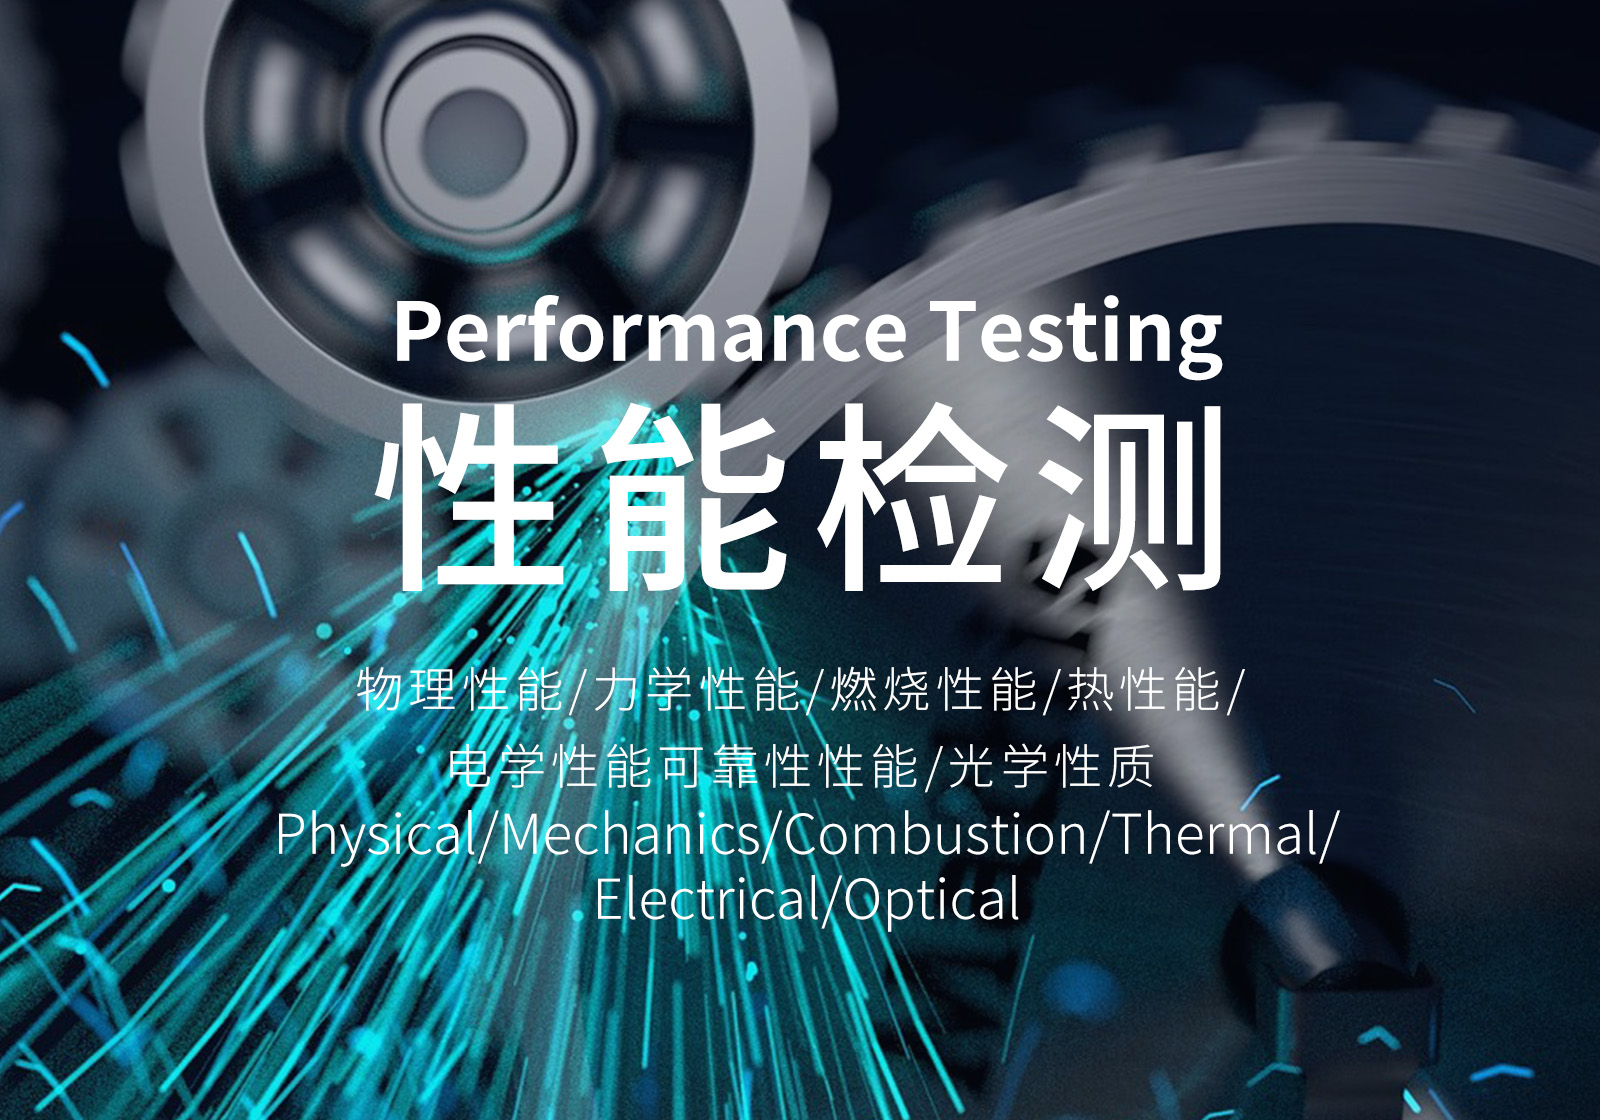 performance testing